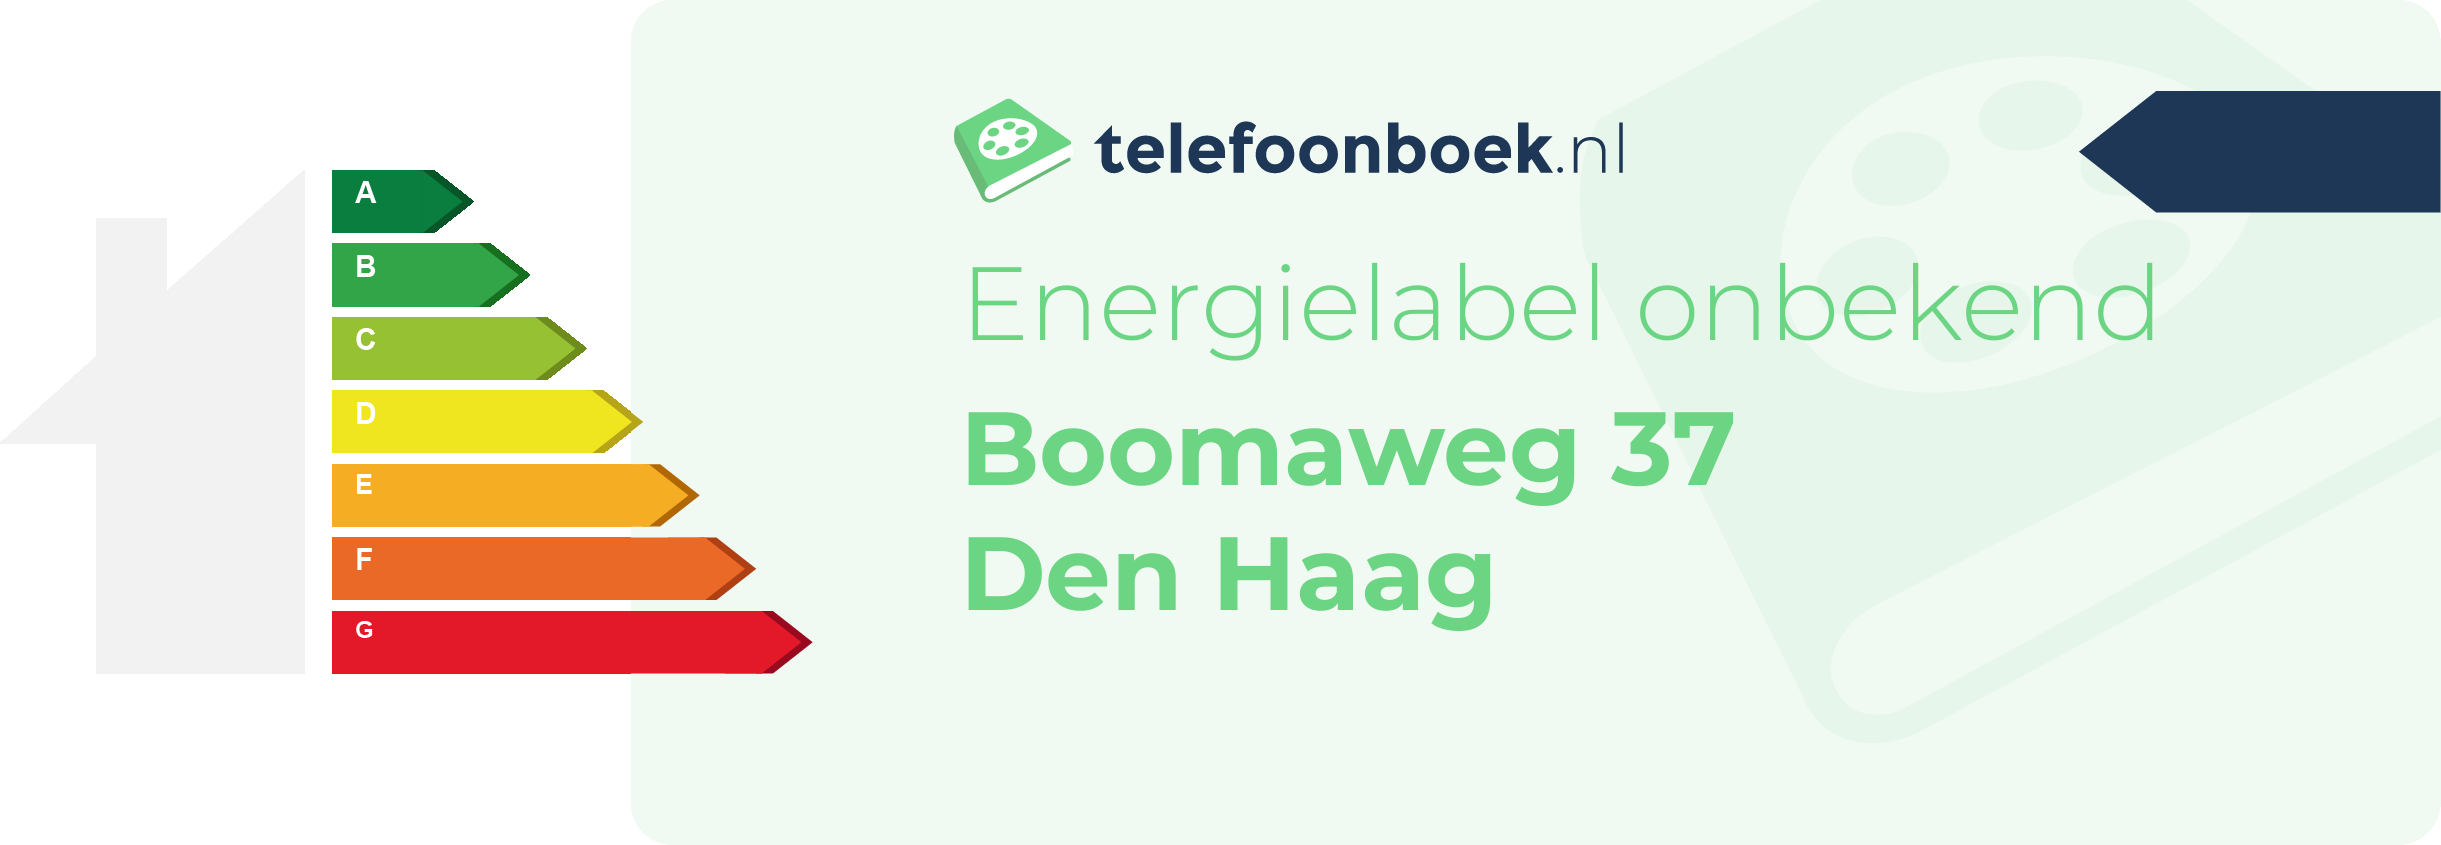 Energielabel Boomaweg 37 Den Haag